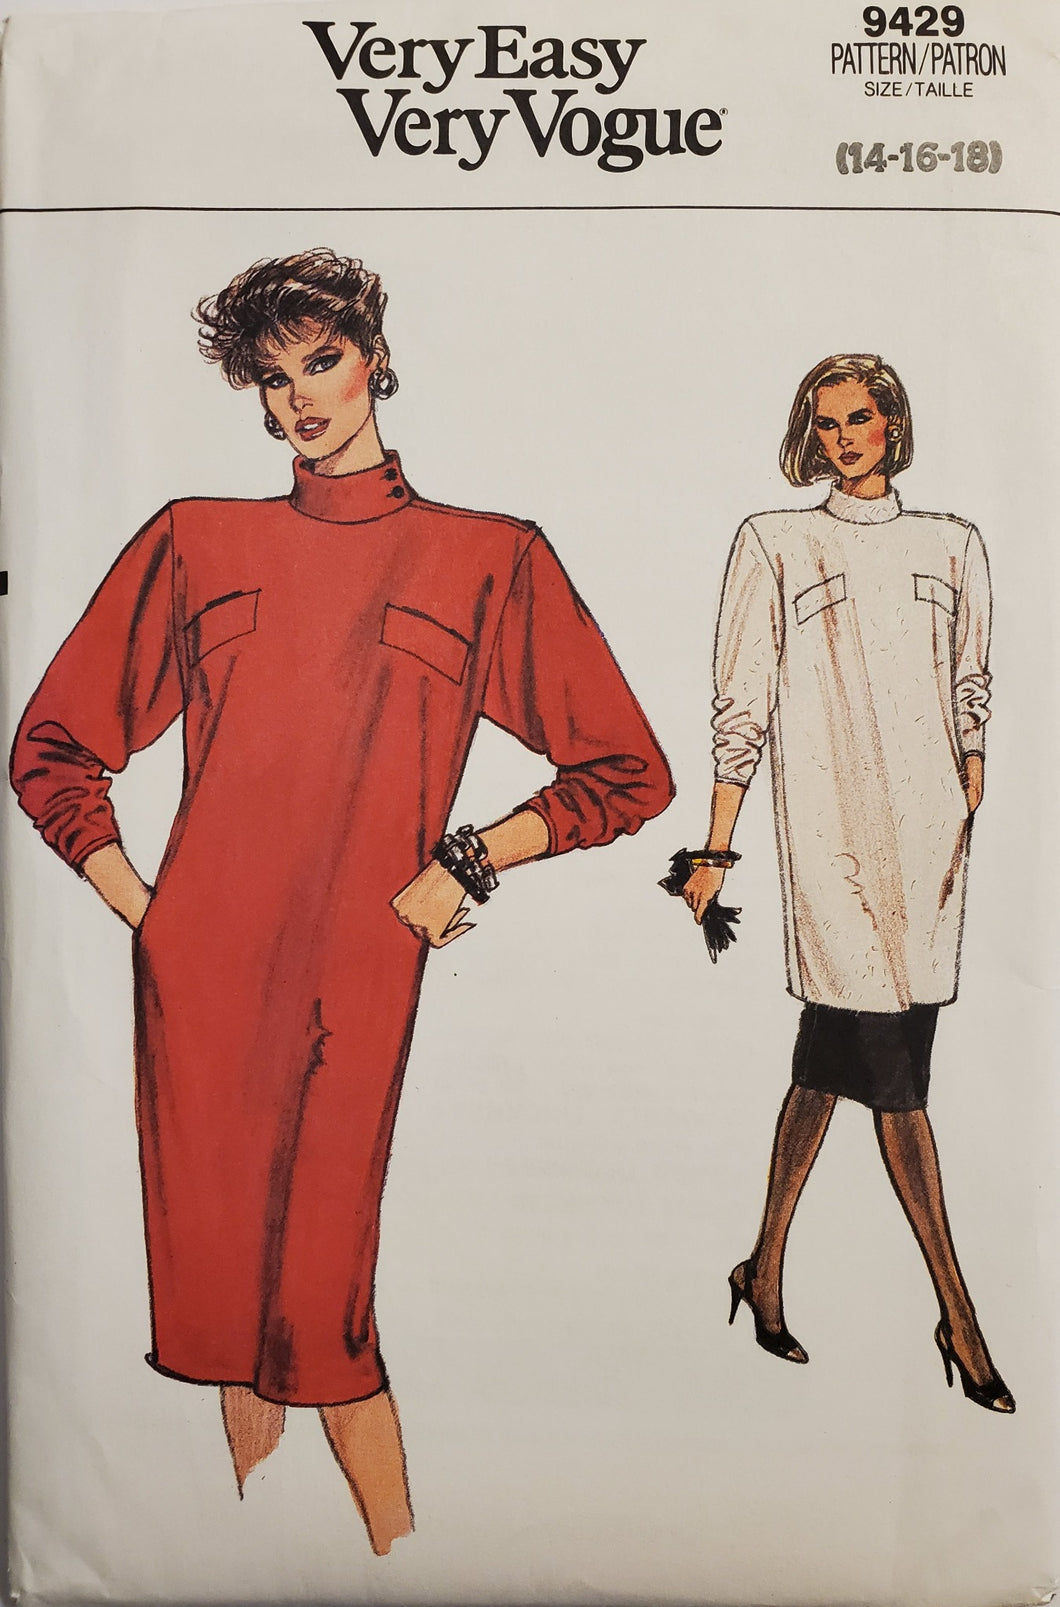 Vogue Pattern 9429, Very Easy, UNCUT, Dress Size 14-16-18, Vintage